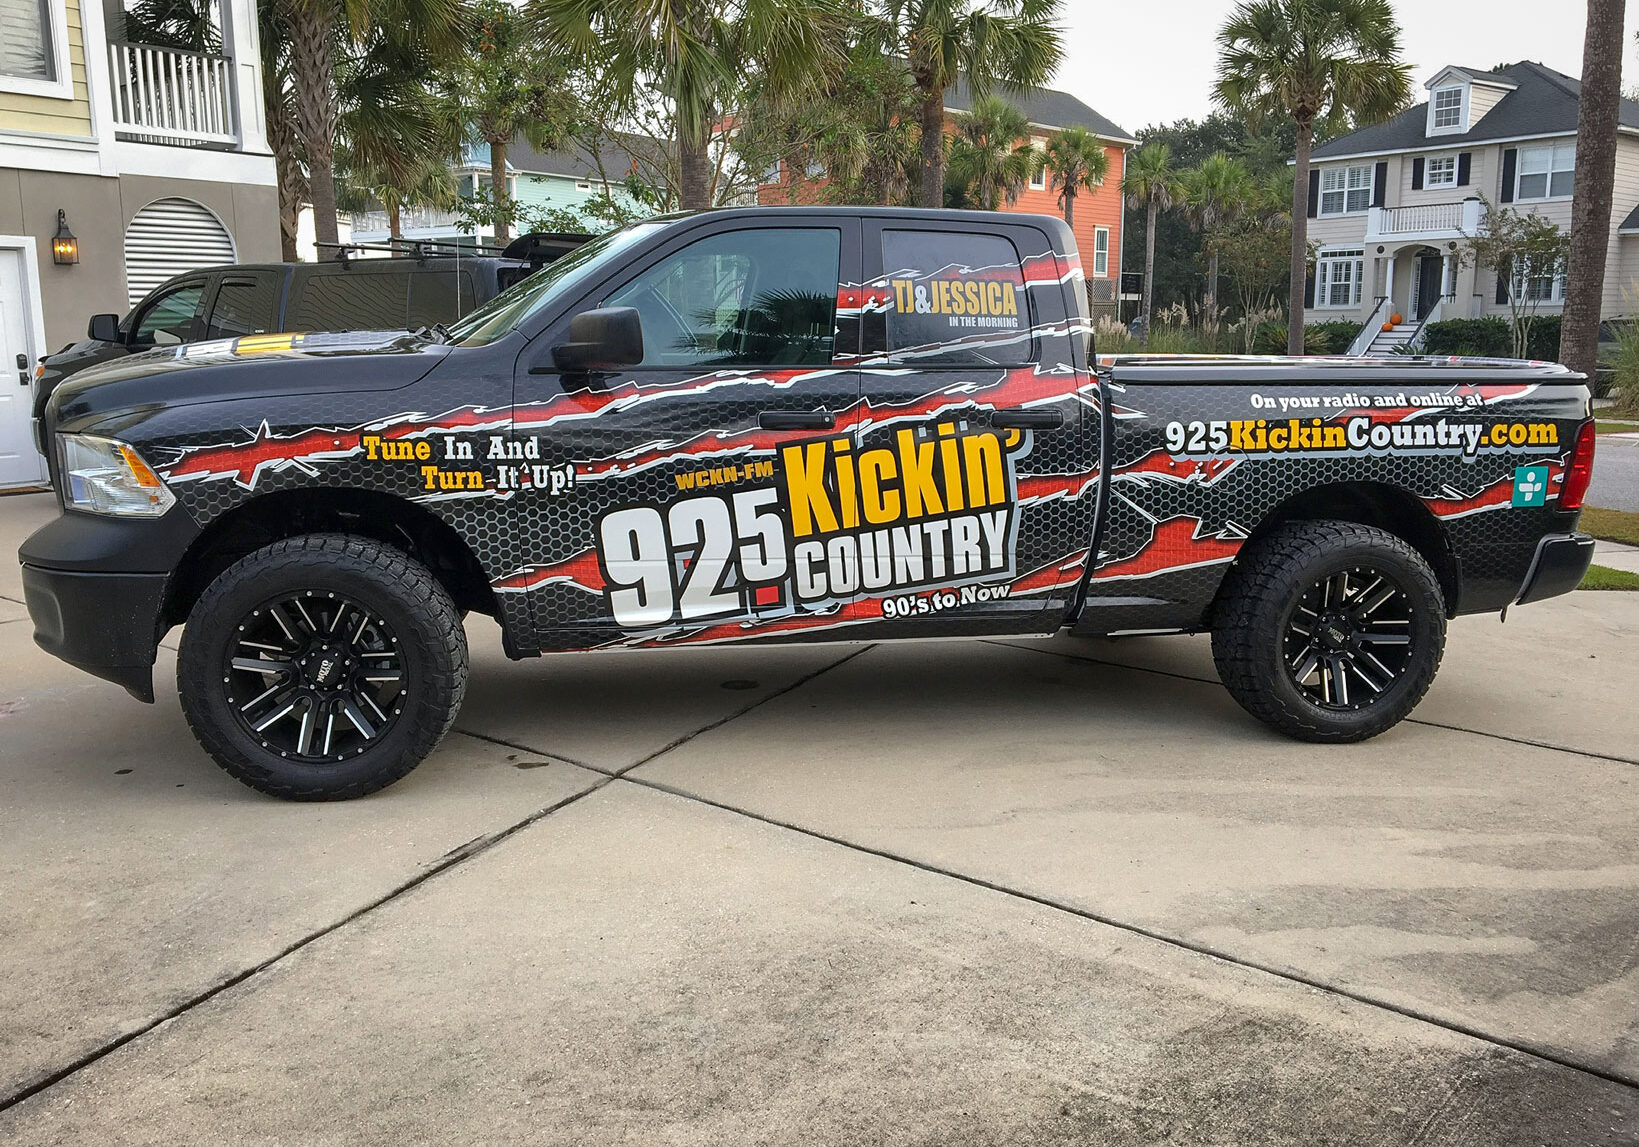 Full Vehicle Wrap for Kickin Country Radio